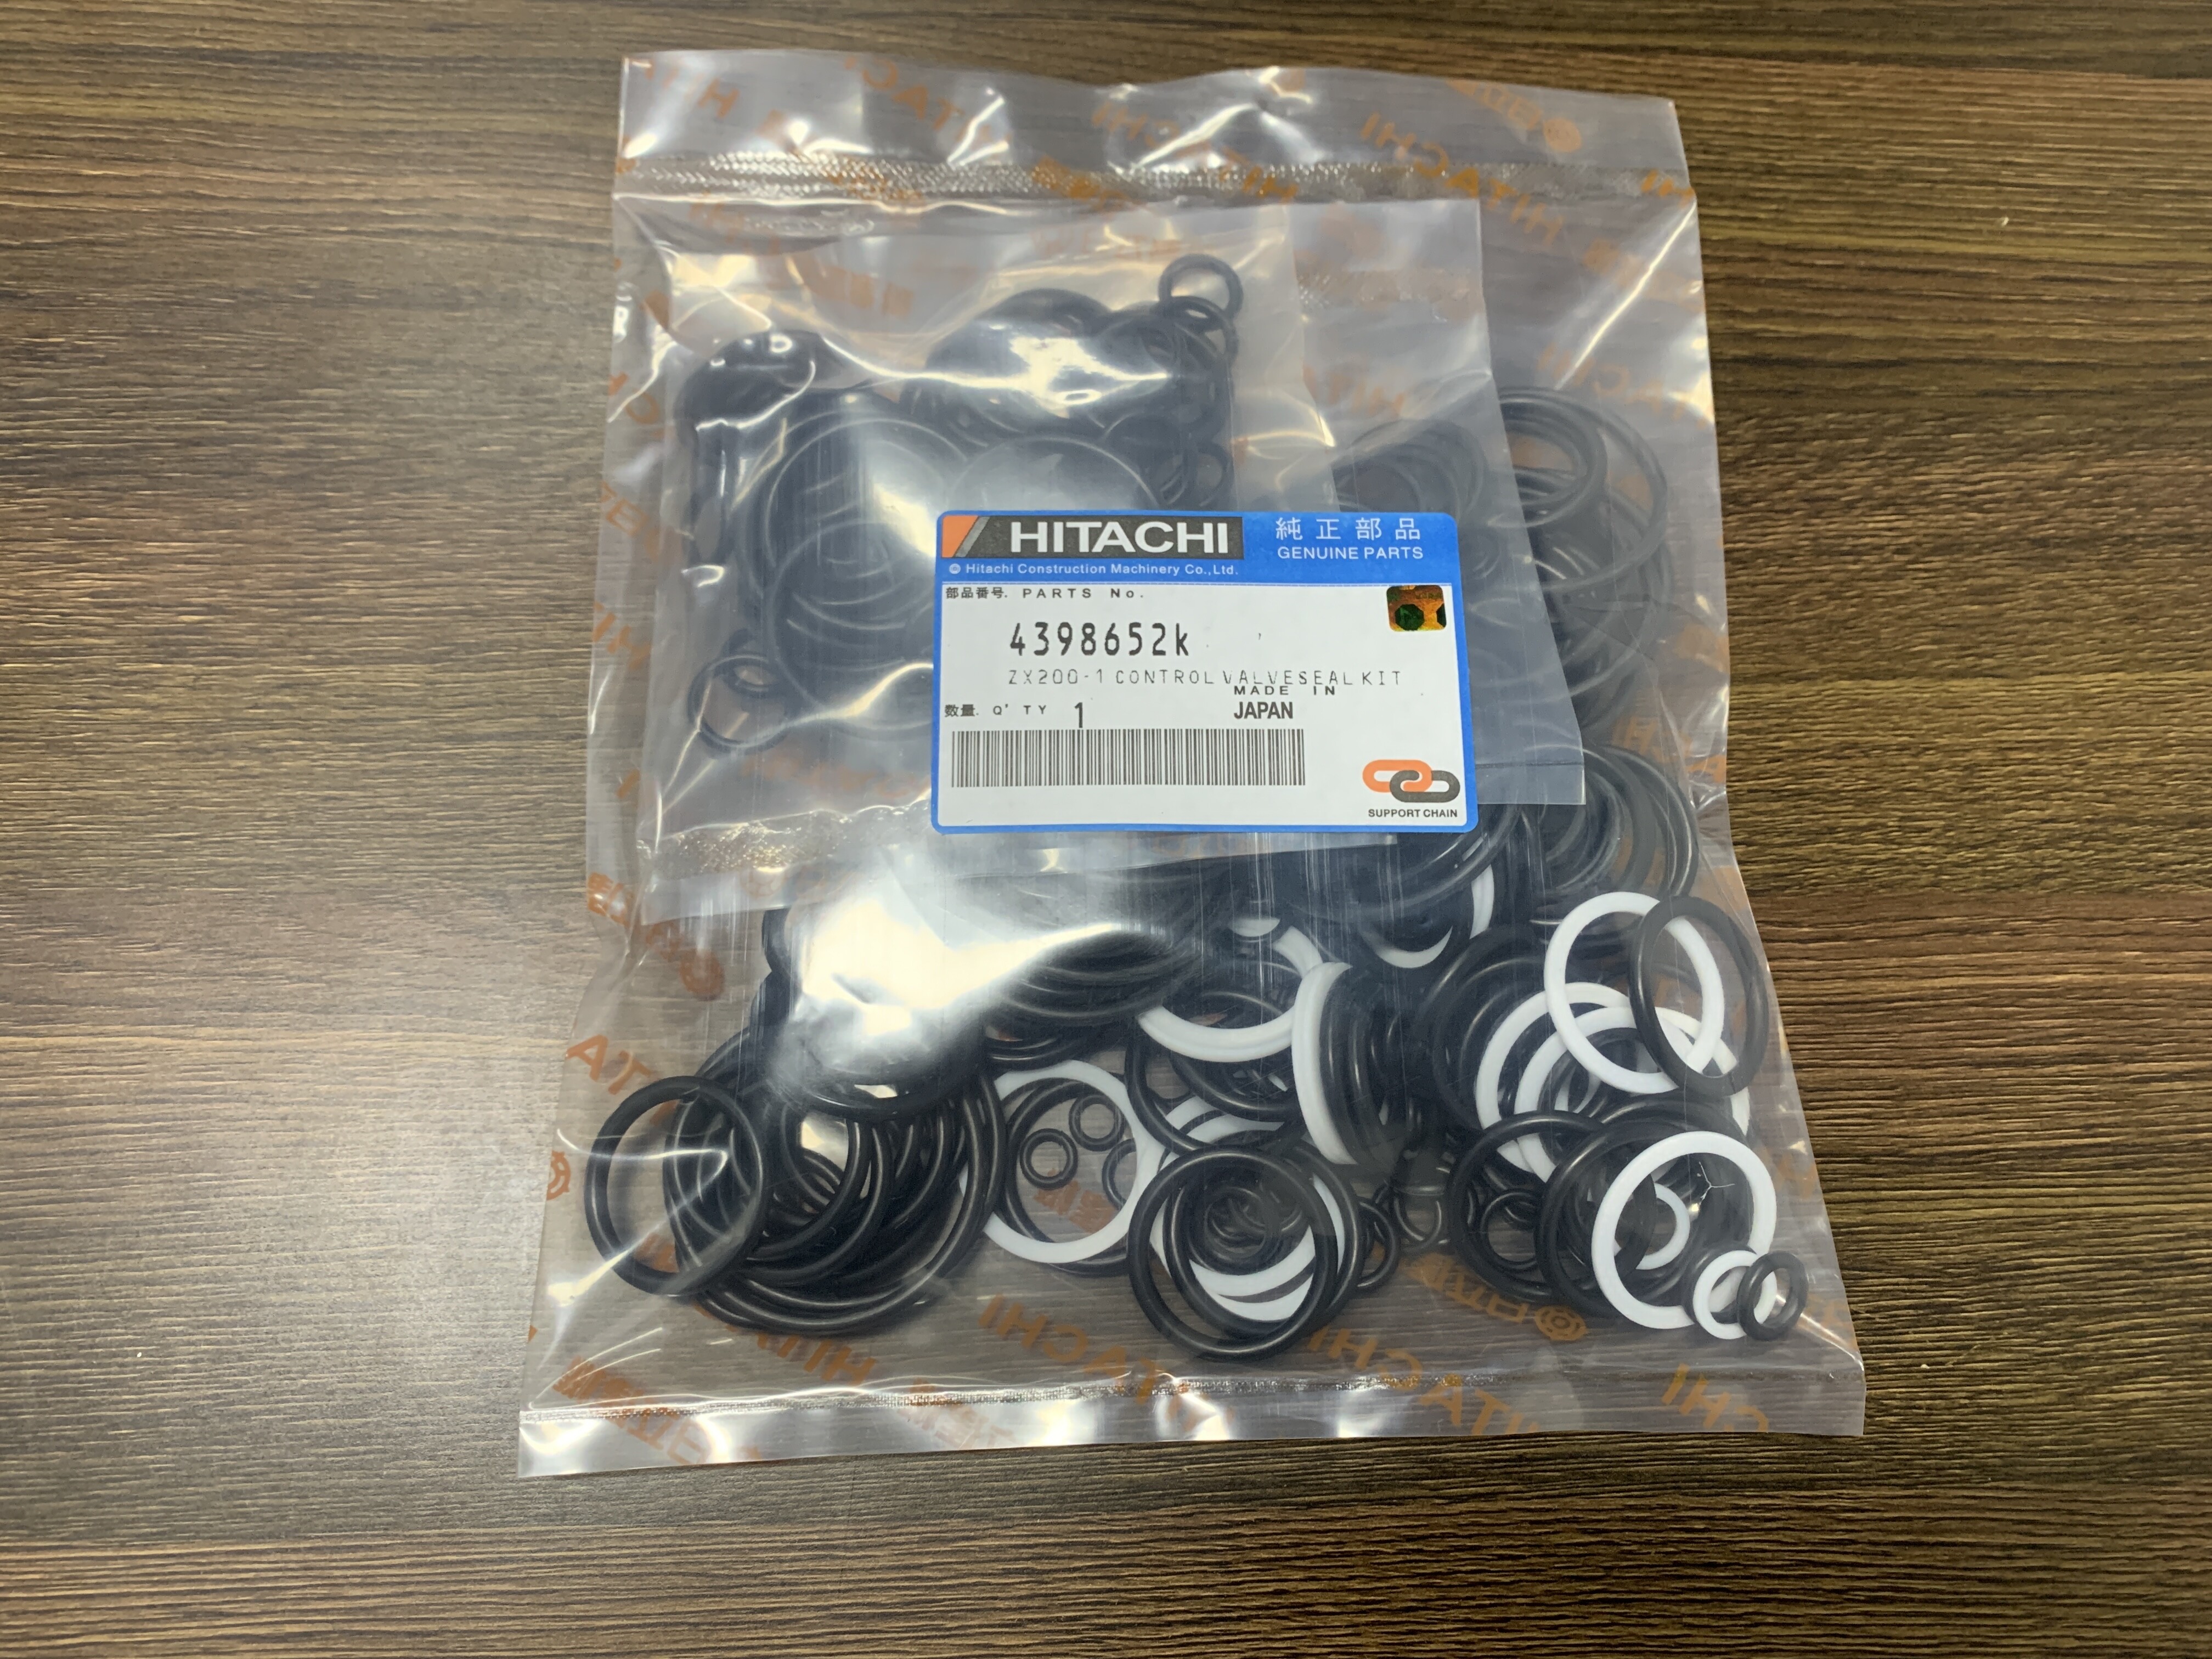 Hitachi distribution valve seal kit for zax200 zax330 part number is 4398652k